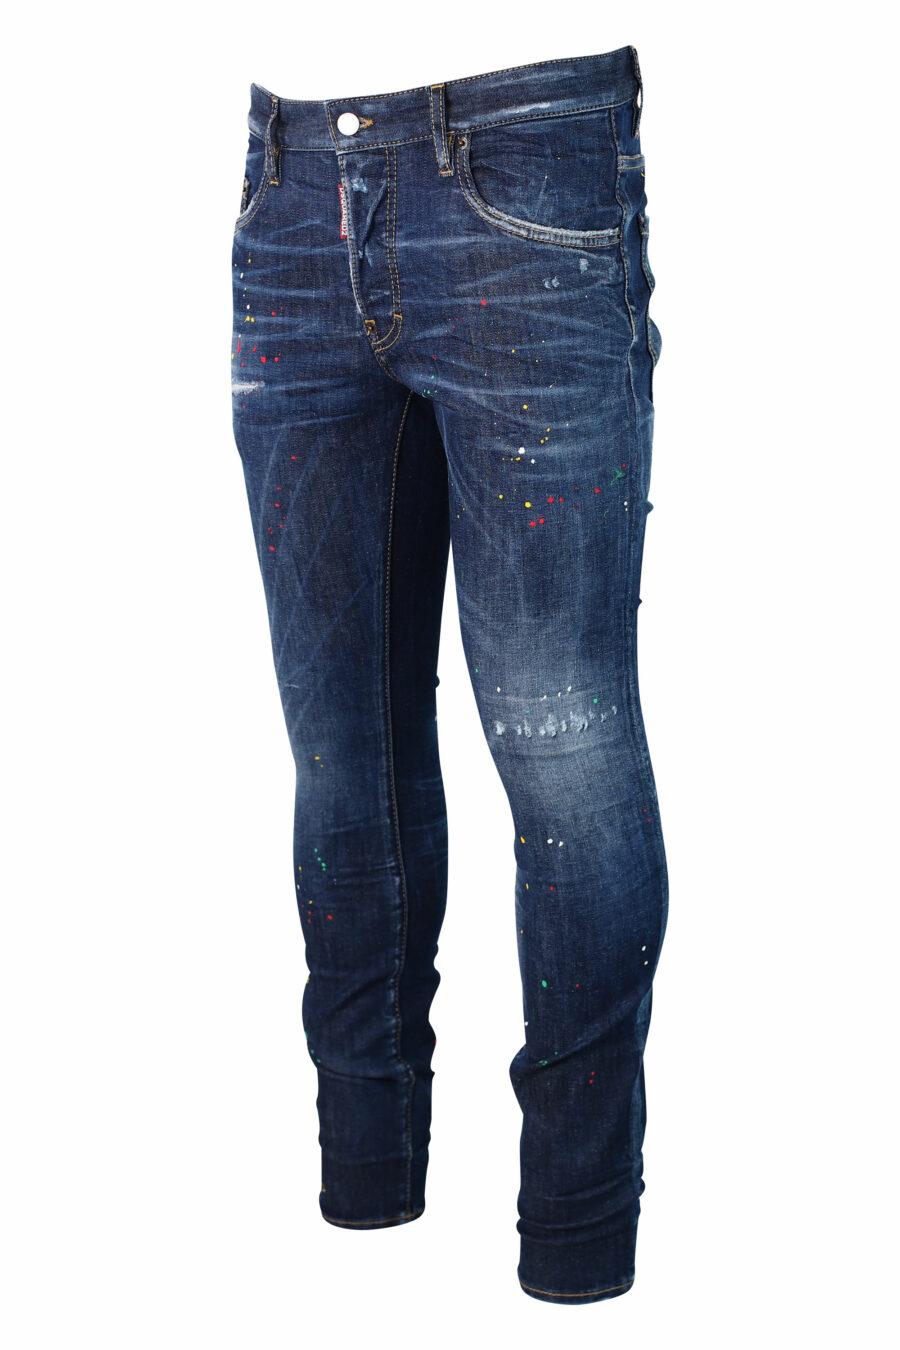 Jean bleu "super twinky jean" porté "bob marley" - IMG 9923